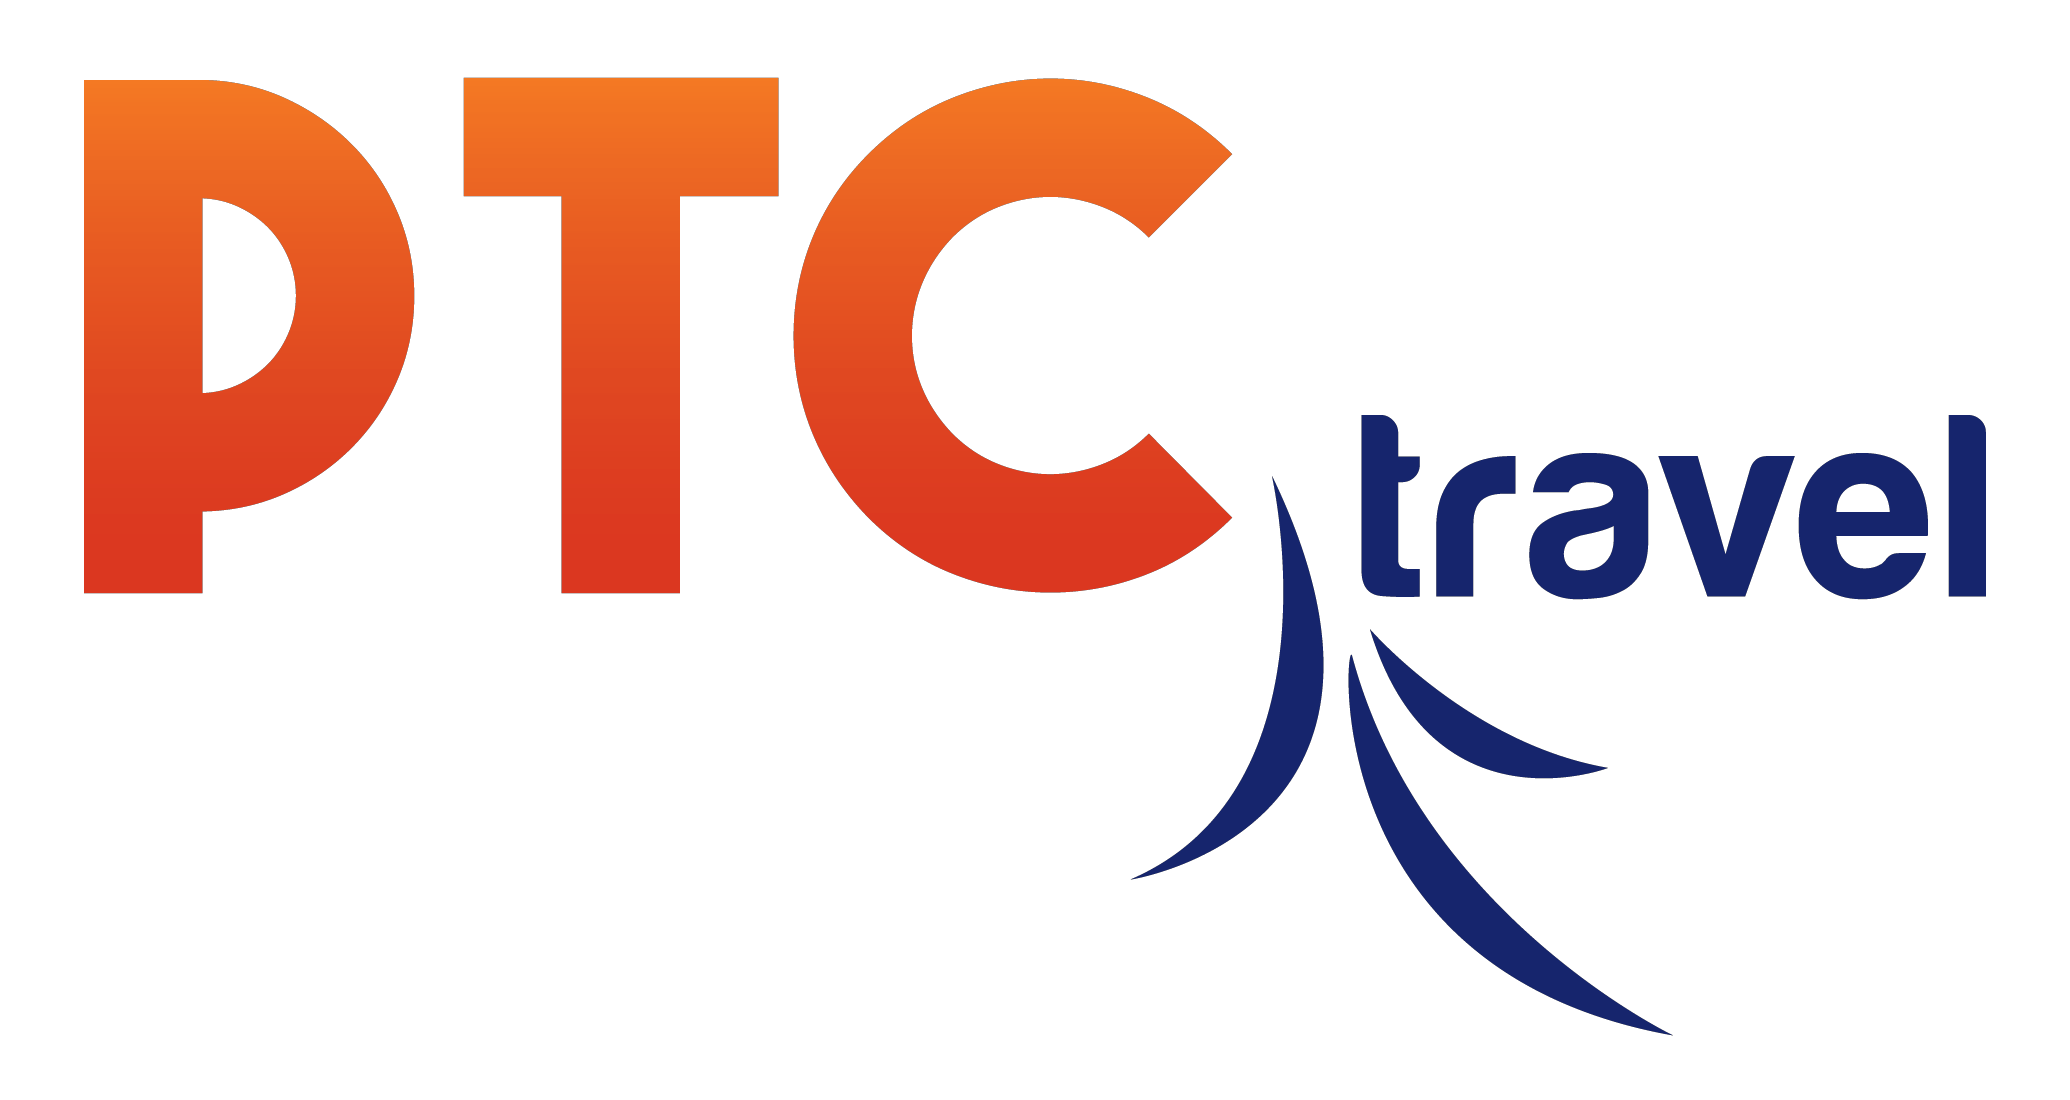 PTC Travel Logo